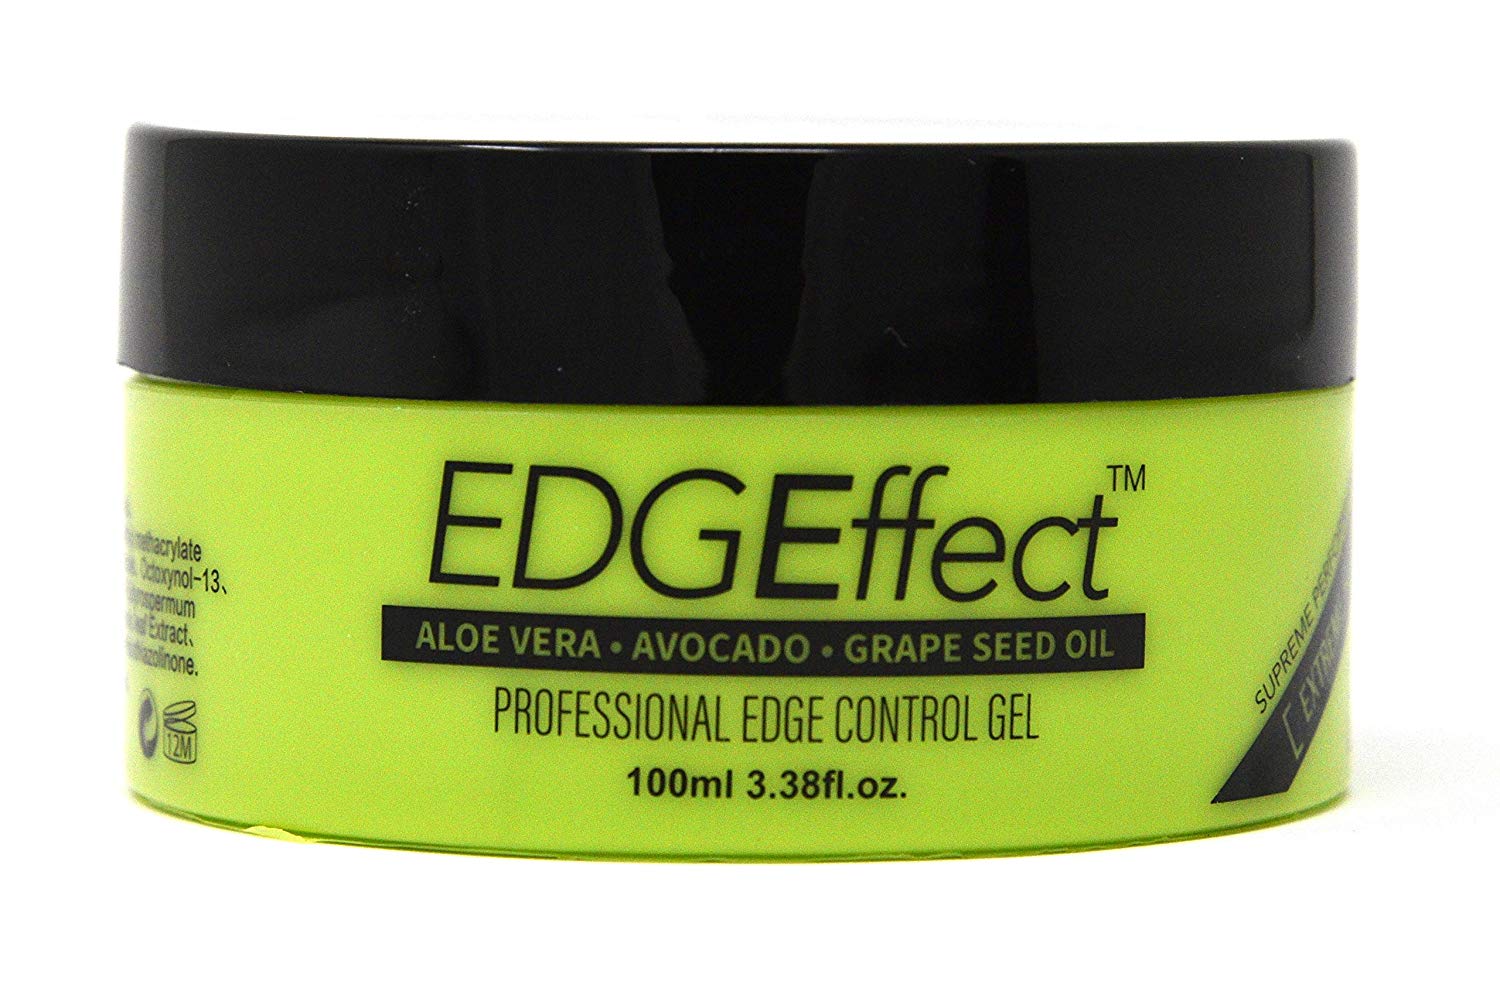 Magic Collection Extreme Edge Effect Professional Edge Control Gel 3.38oz